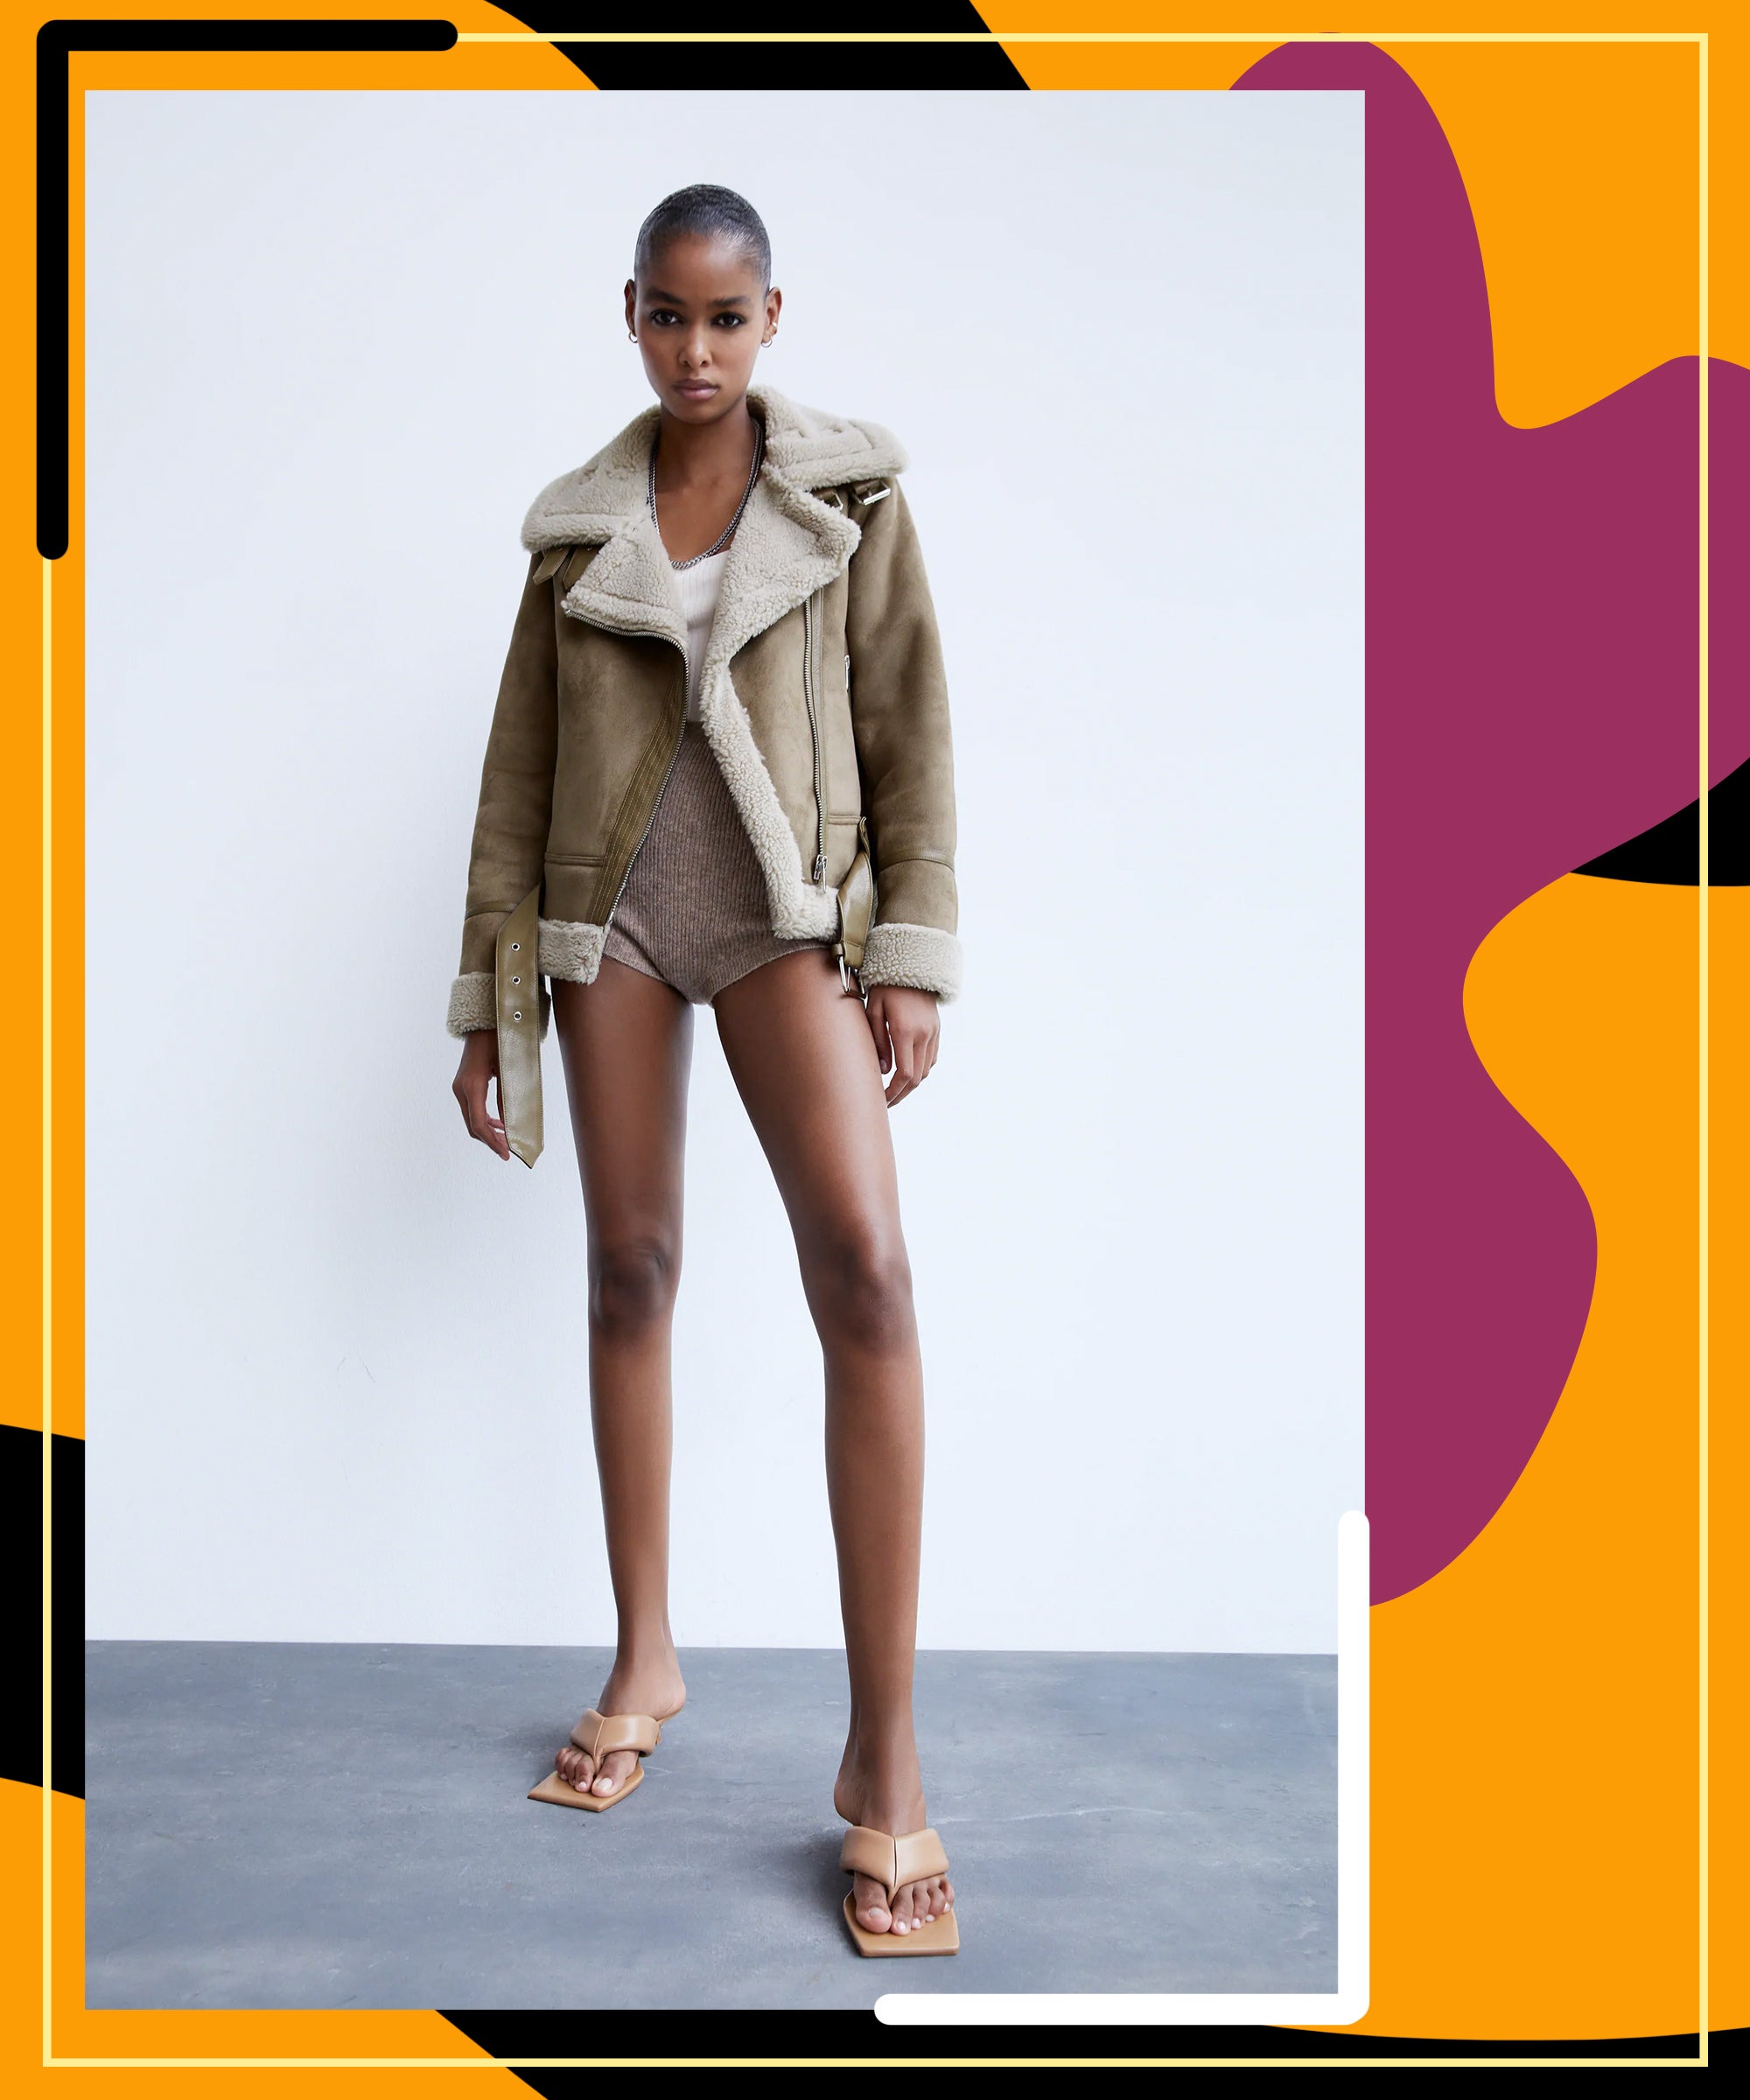 Shoulder Pad Trend 2020: The Best Zara Pieces To Get The Look